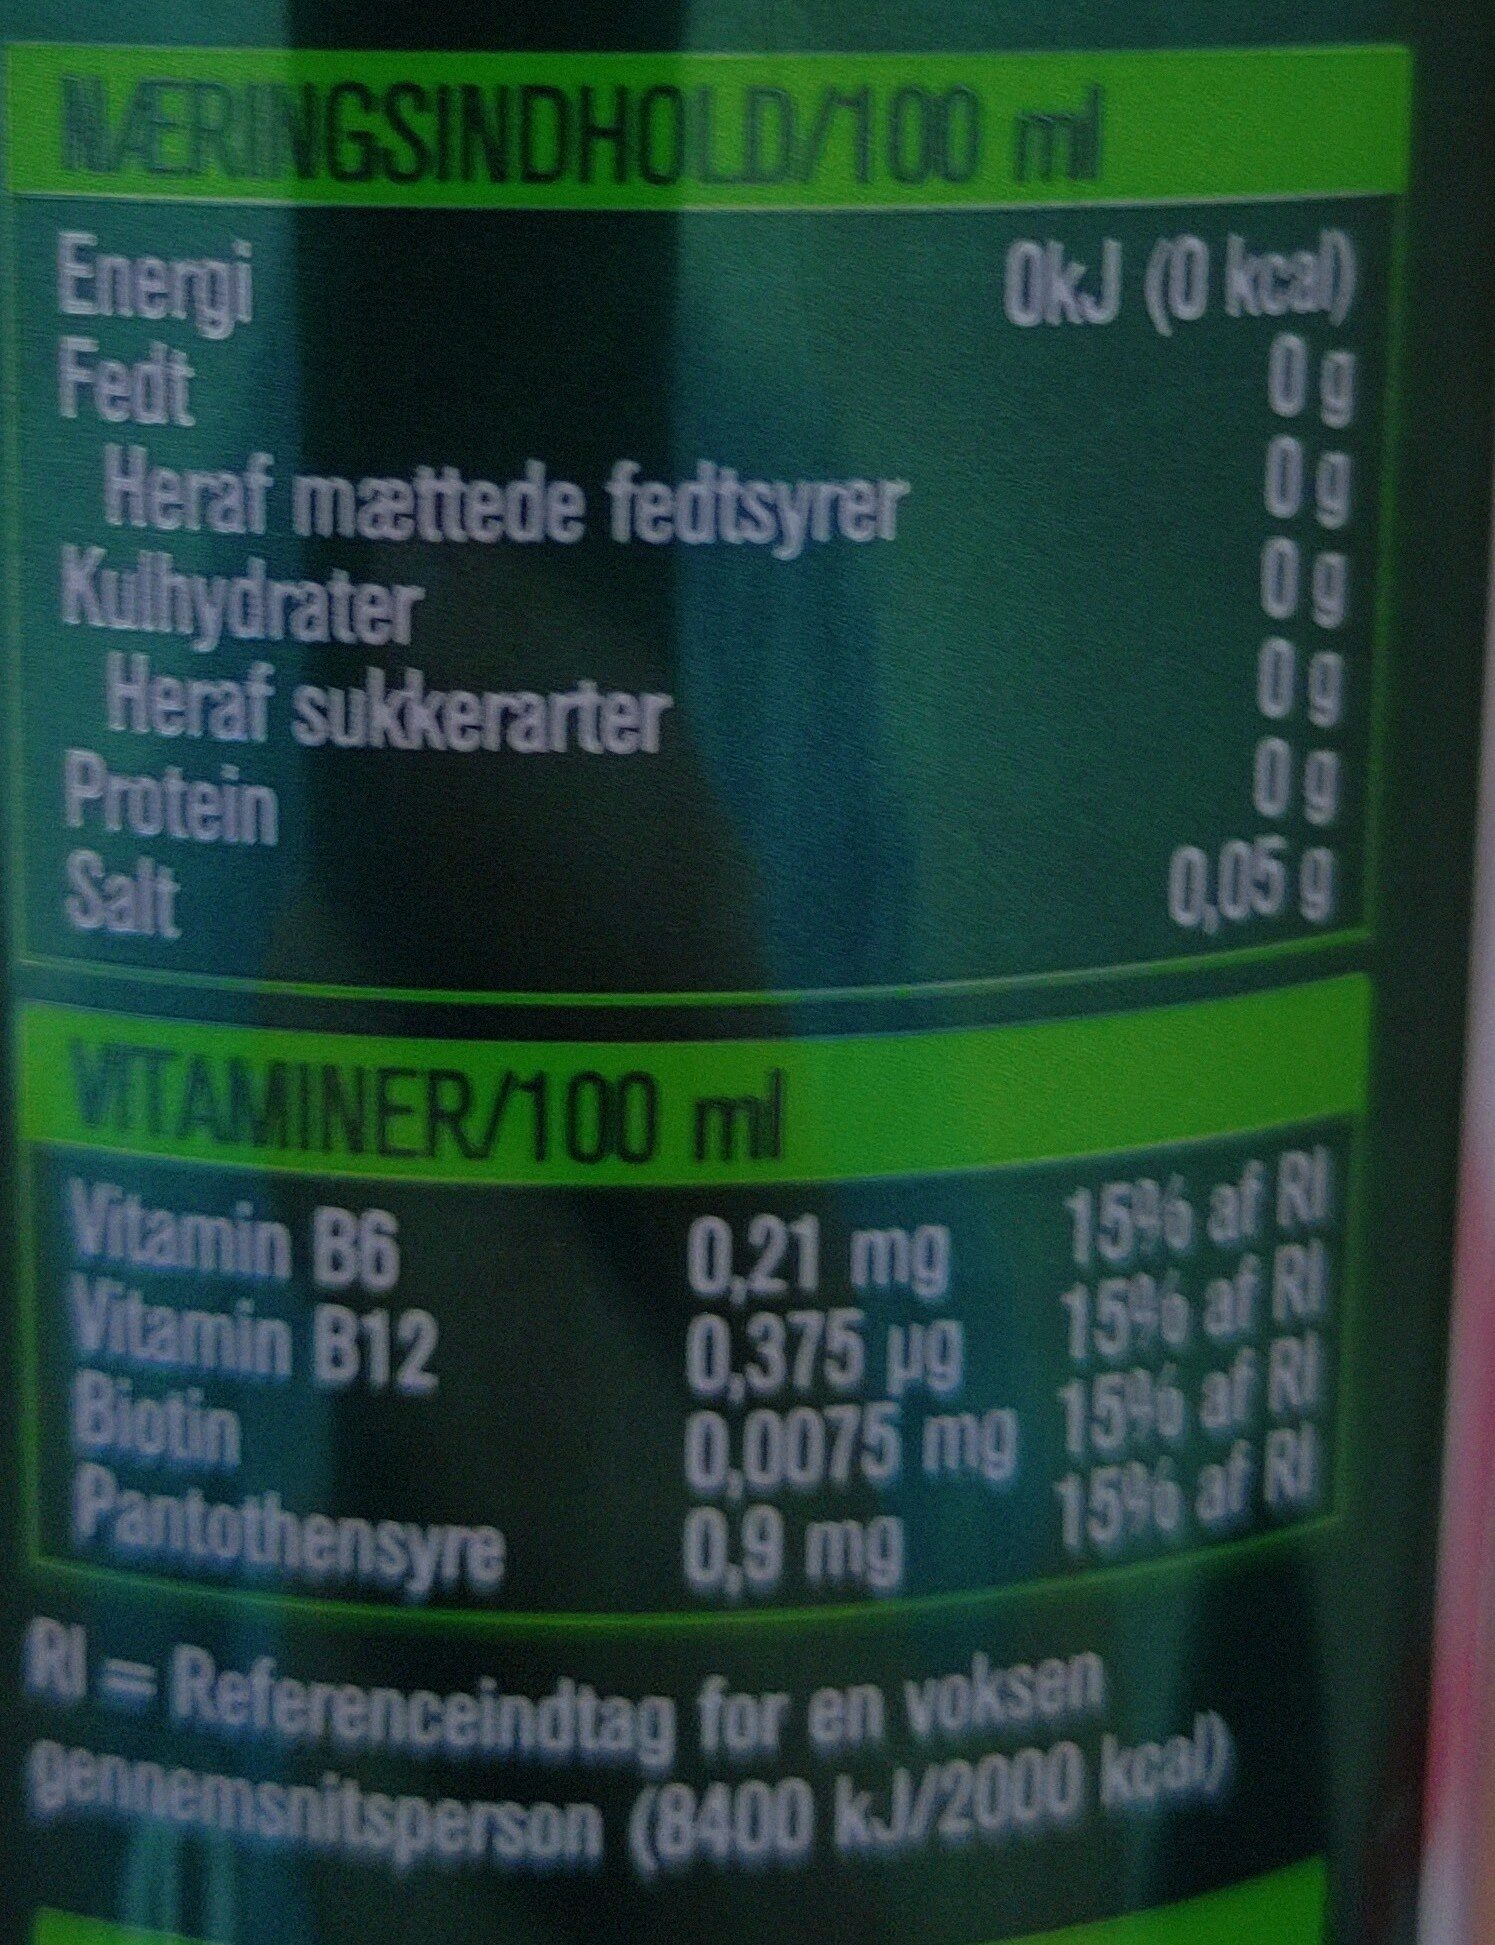 Booster Original - 0 kcal - Ernæringsfakta